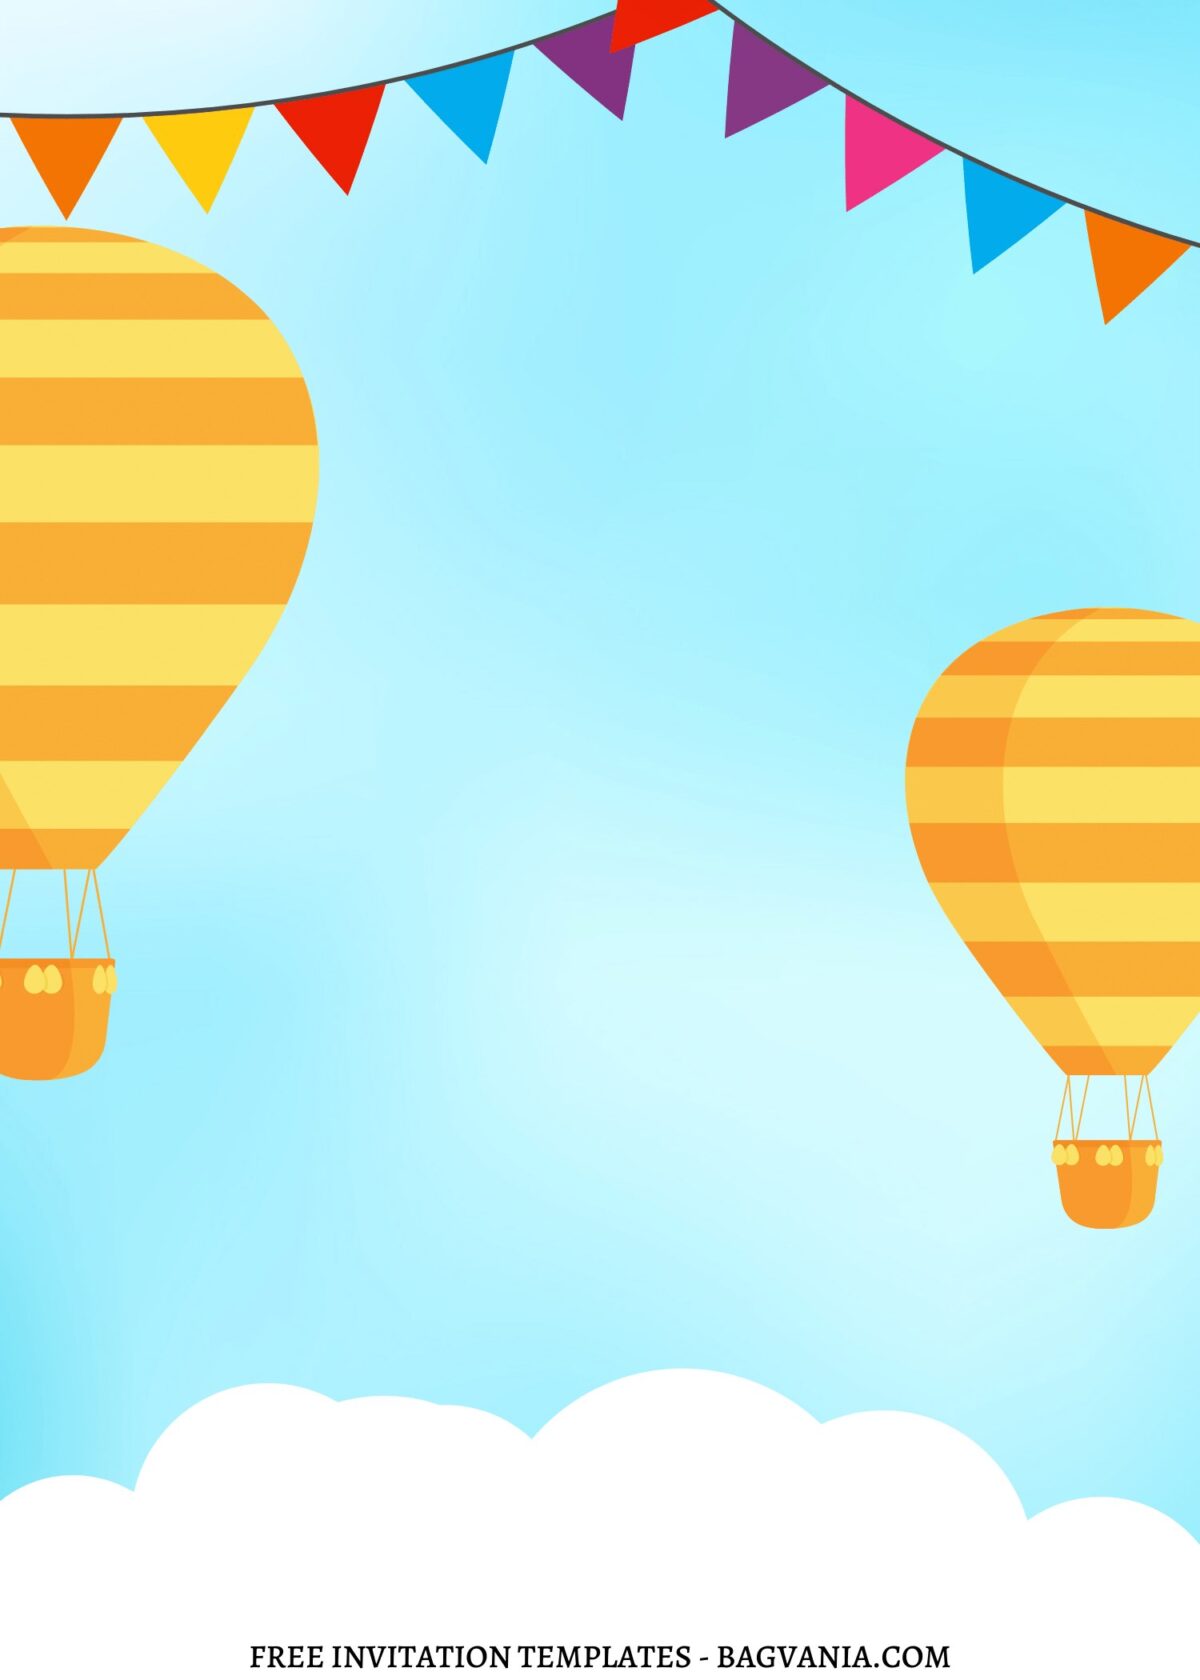 FREE EDITABLE - 10+ Safari Hot Air Balloon Canva Birthday Invitation Templates with fluffy white cloud